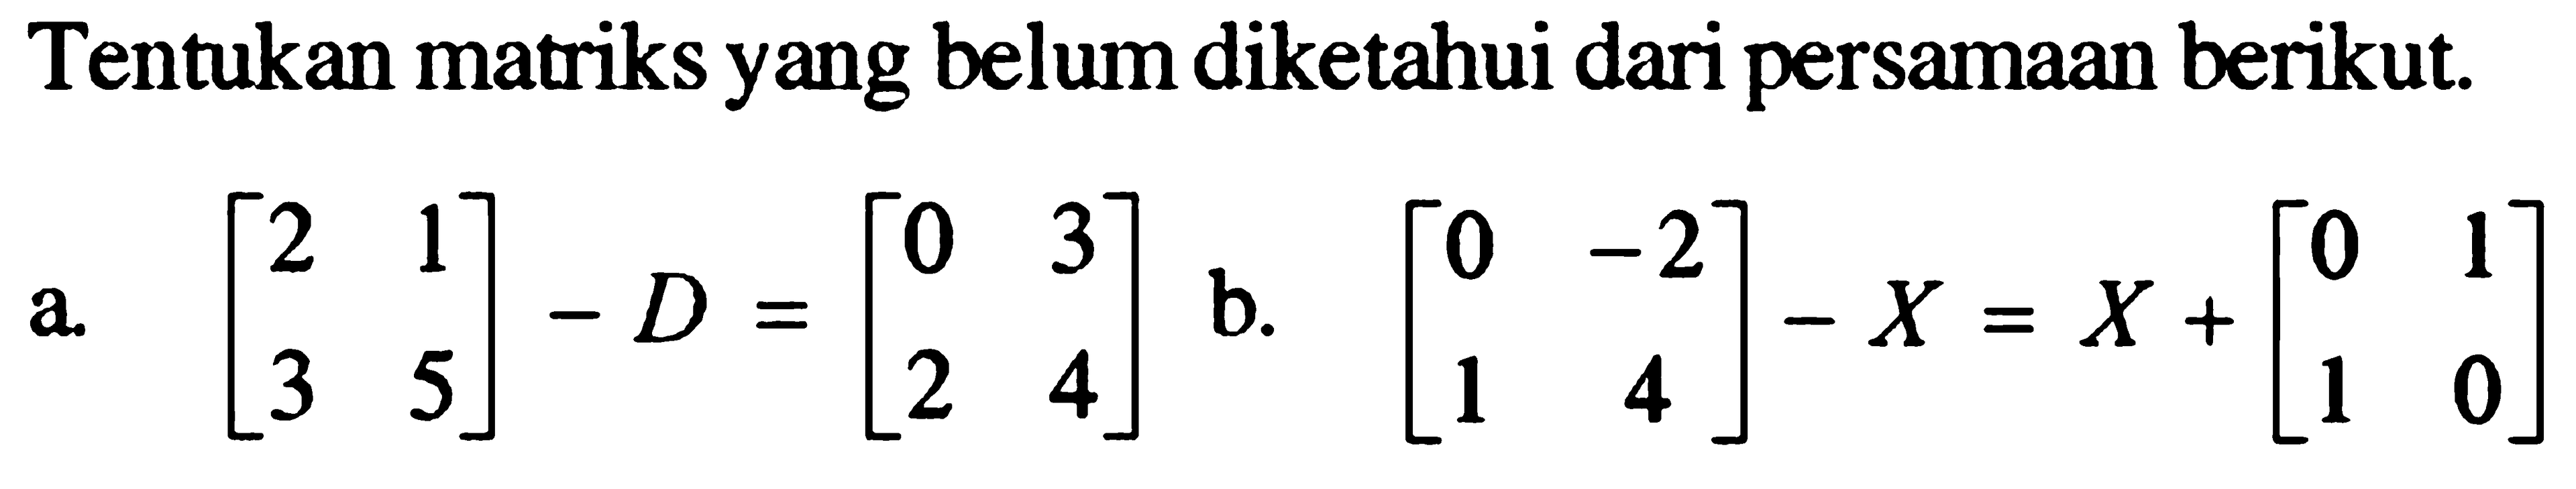 Tentukan matriks yang belum diketahui dari persamaan berikut. a. [2 1 3 5]-D=[0 3 2 4] b. [0 -2 1 4]-X=X+[0 1 1 0]